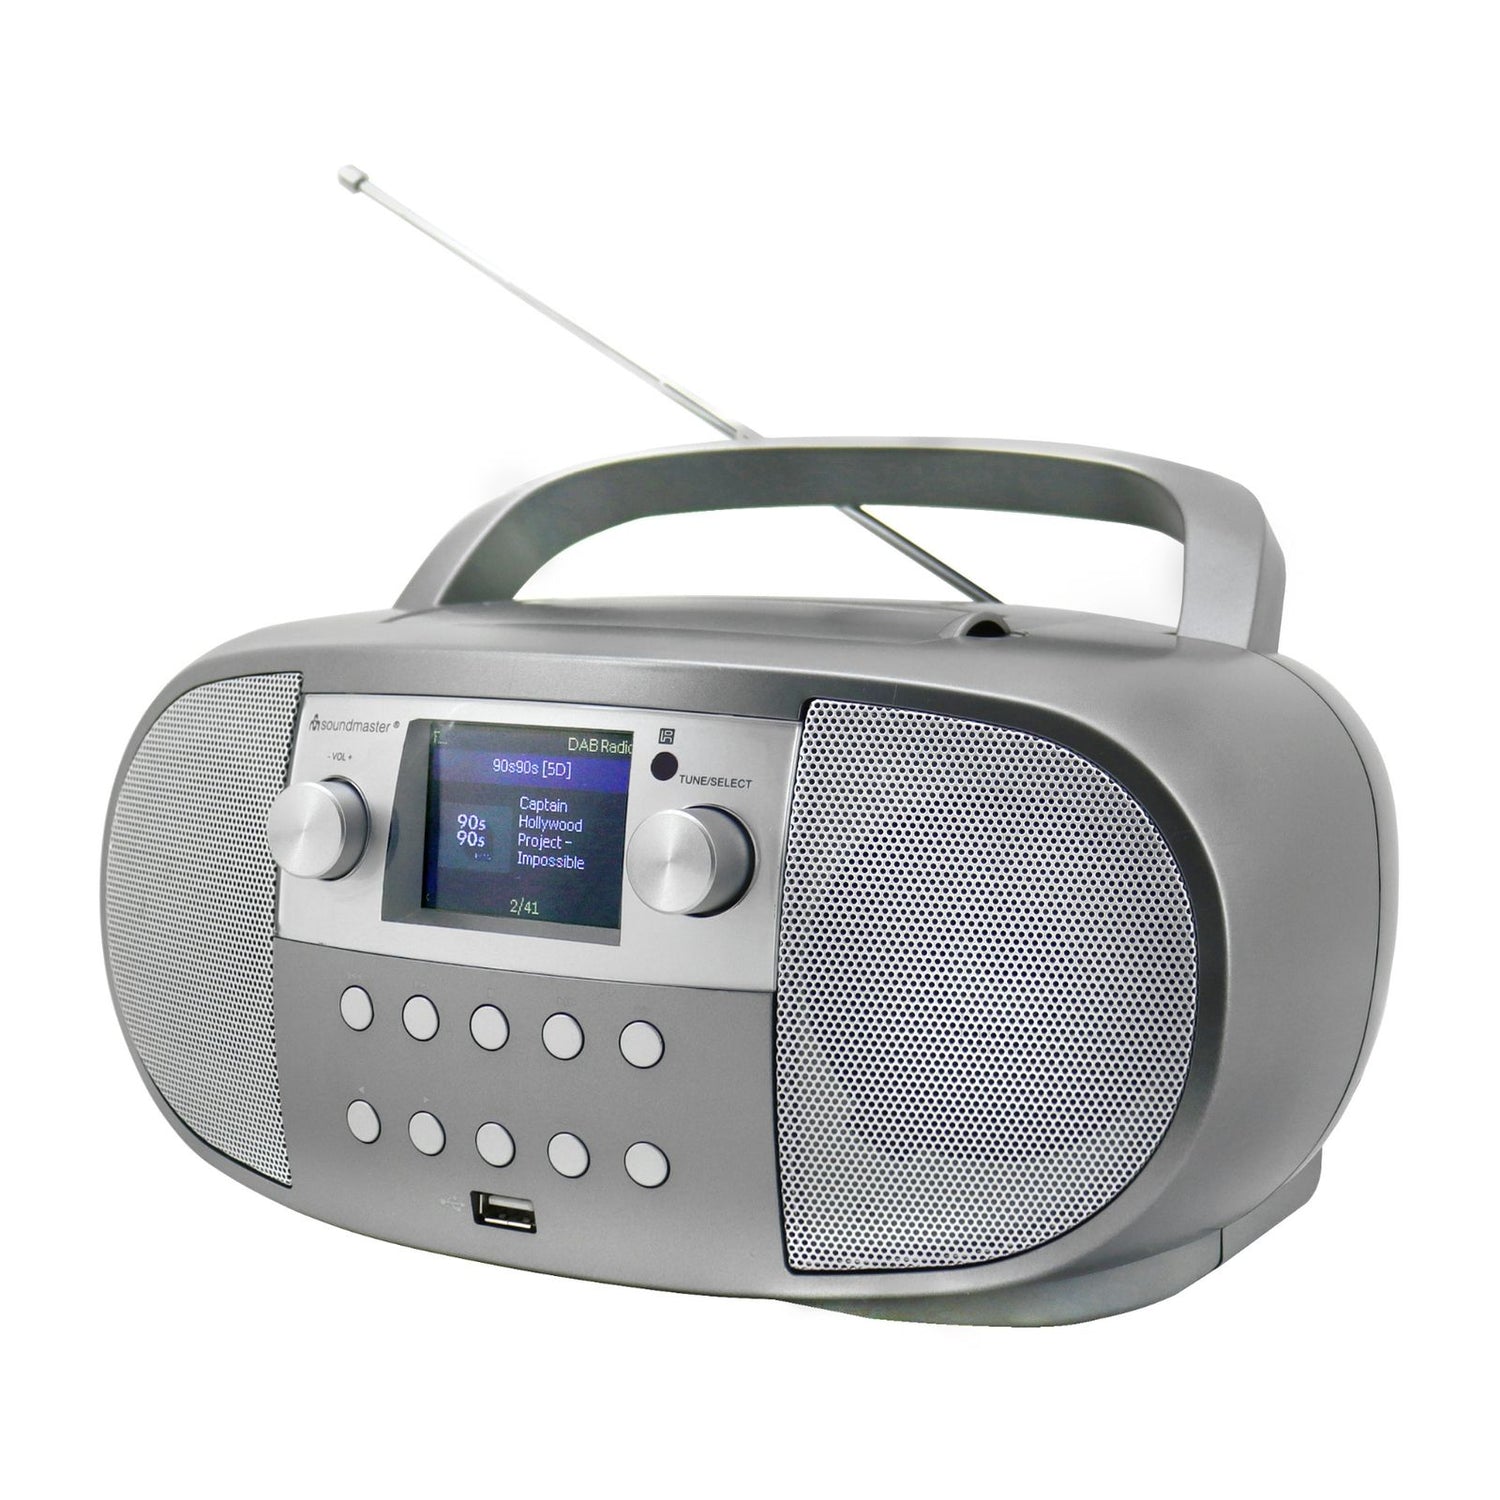 Soundmaster SCD7600TI Boombox Internetradio WLAN Netzwerkradio DLNA Bluetooth DAB+ CD USB MP3 Weckerfunktion Hörbuchfunktion Farbdisplay